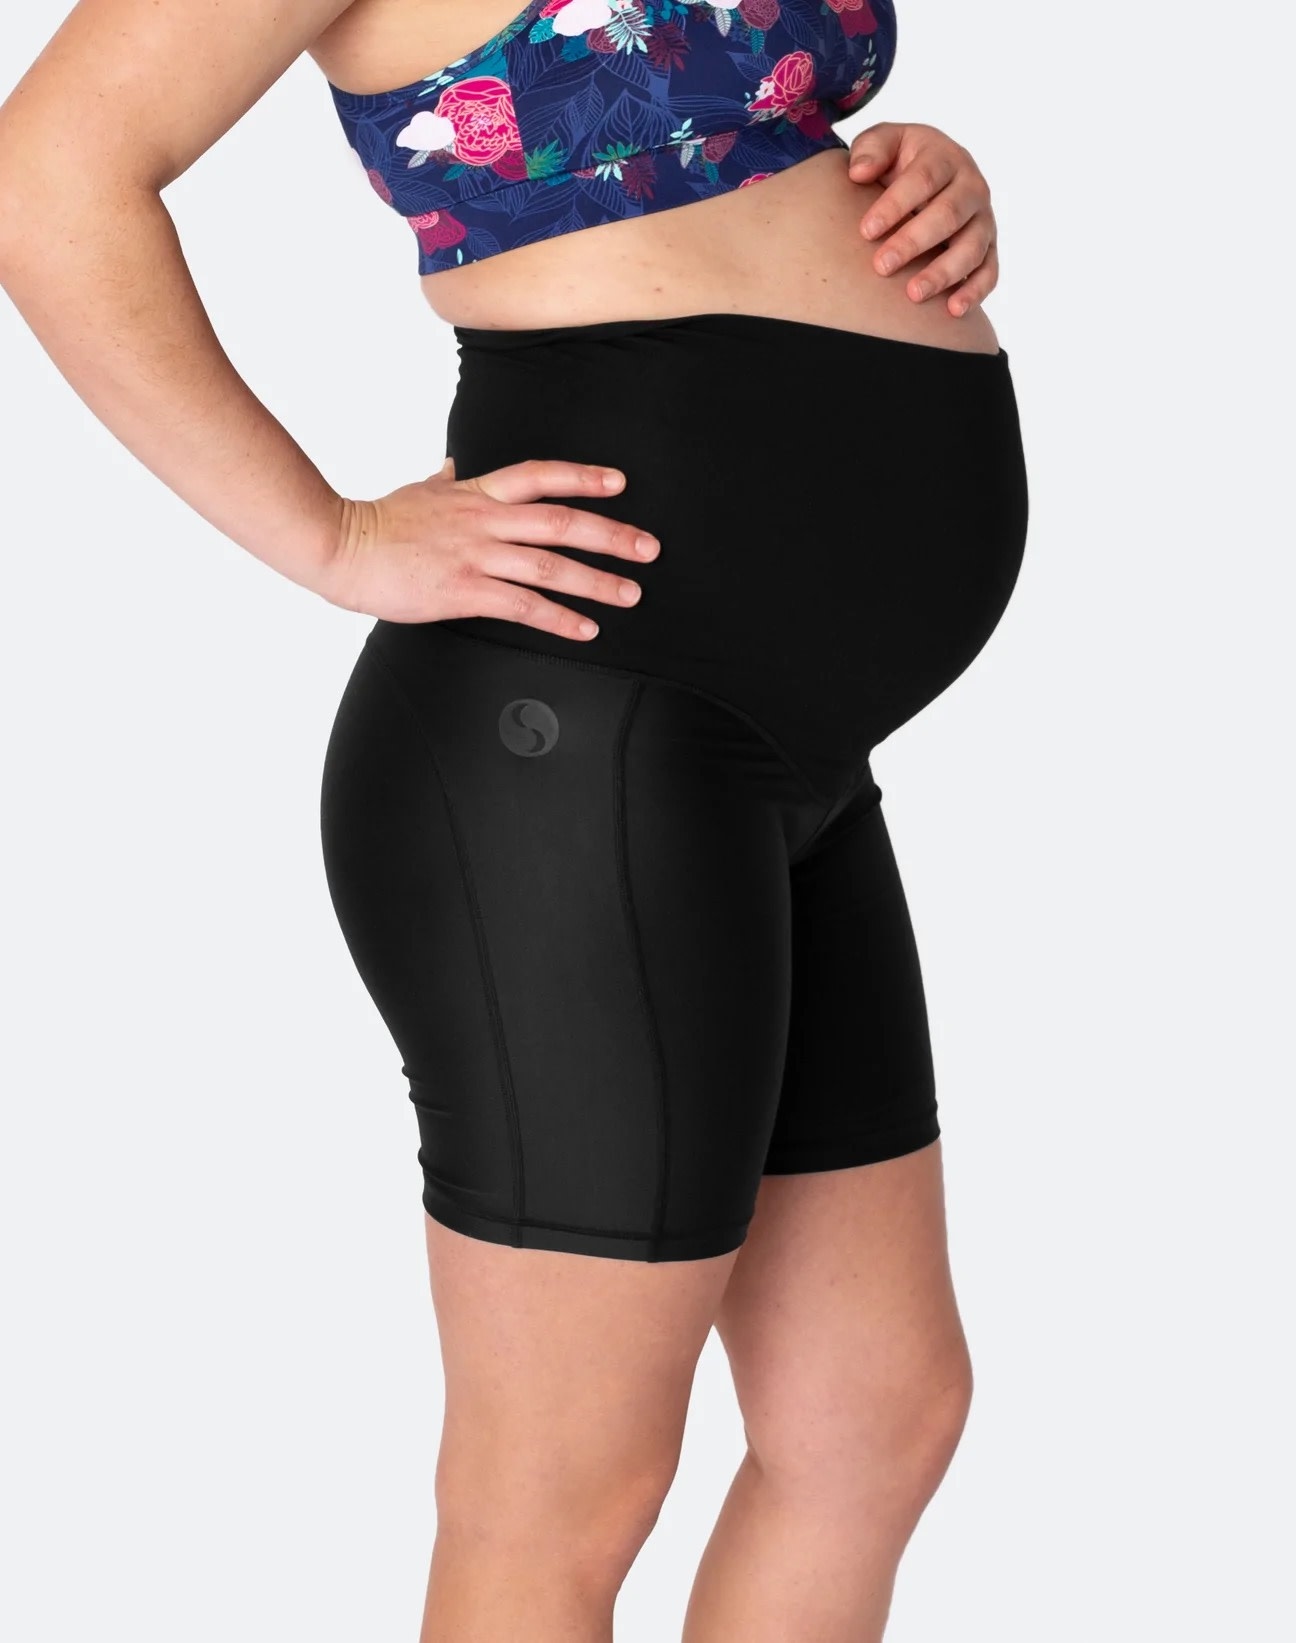 Brilliant Basics Women's Maternity Bike Short - Black - Size